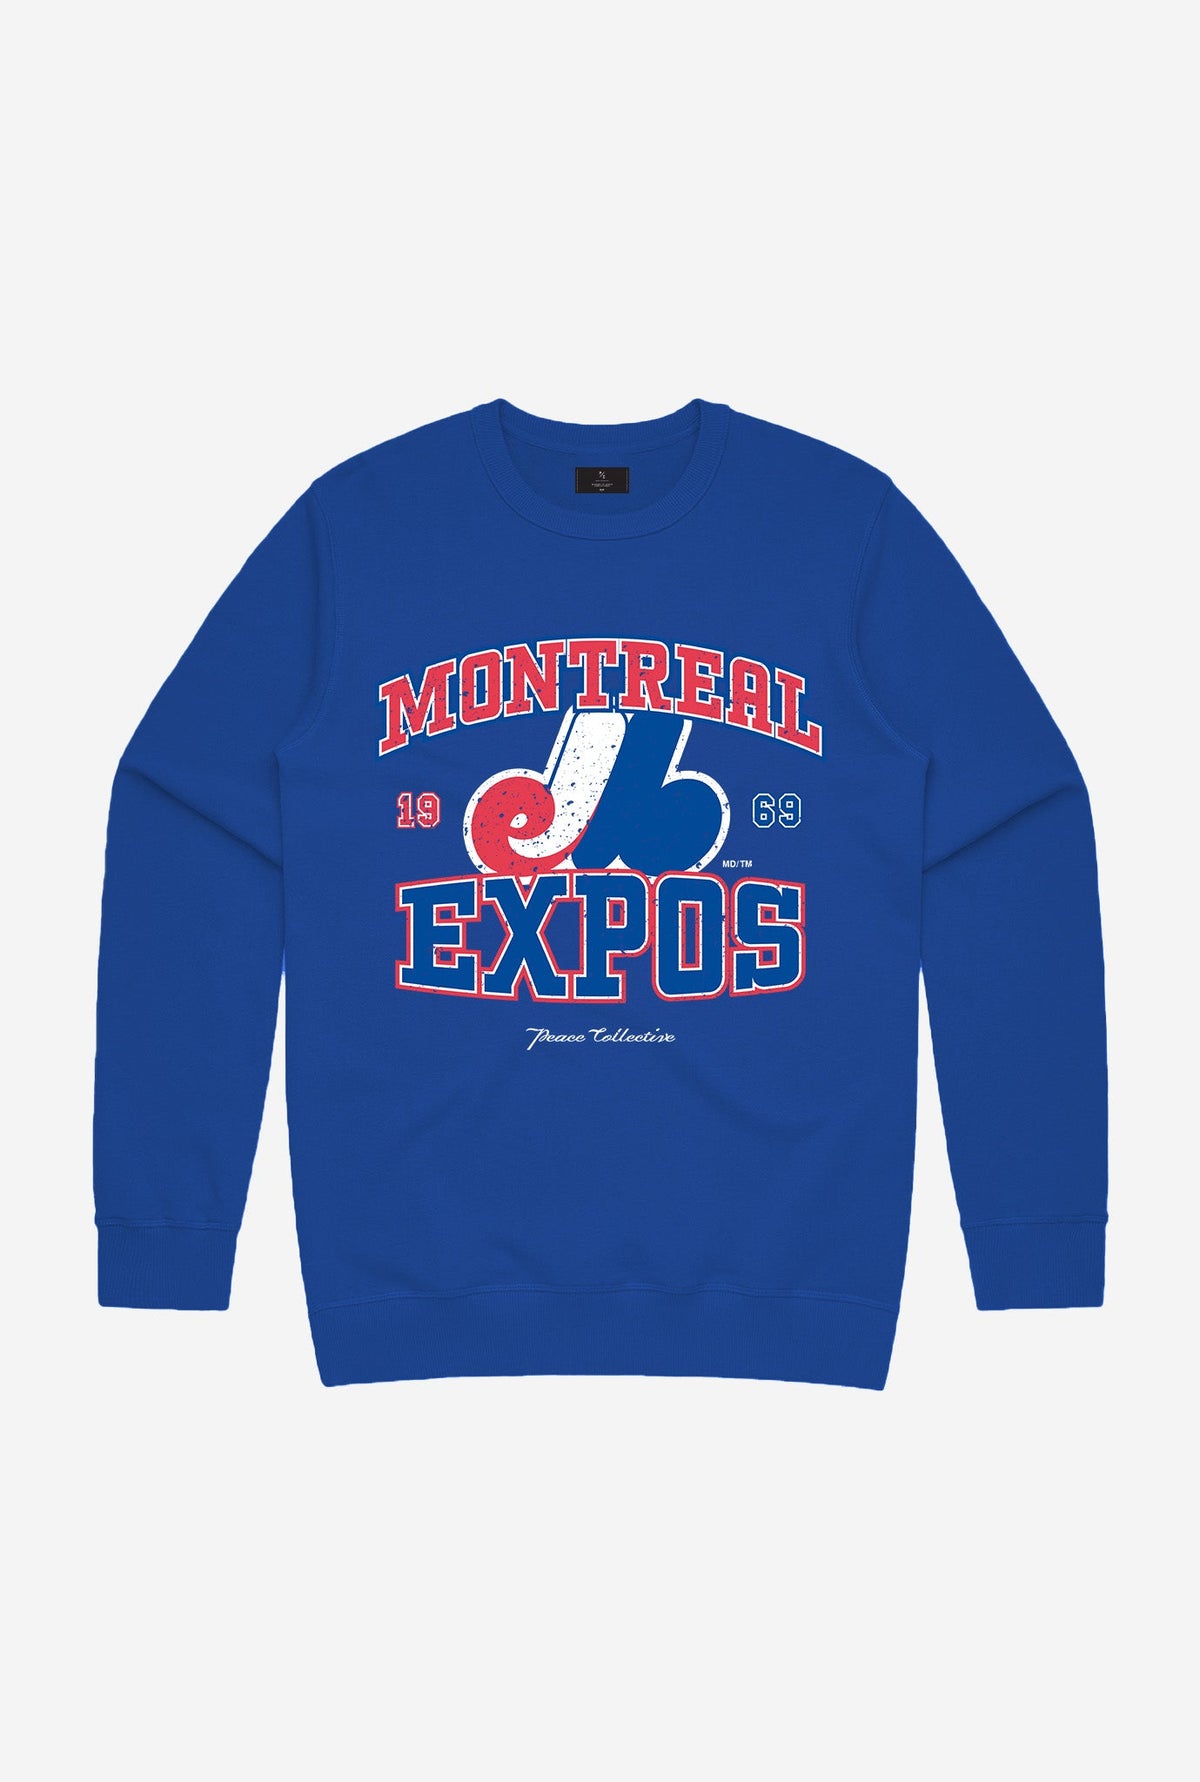 Montreal Expos Vintage Washed Crewneck - Royal